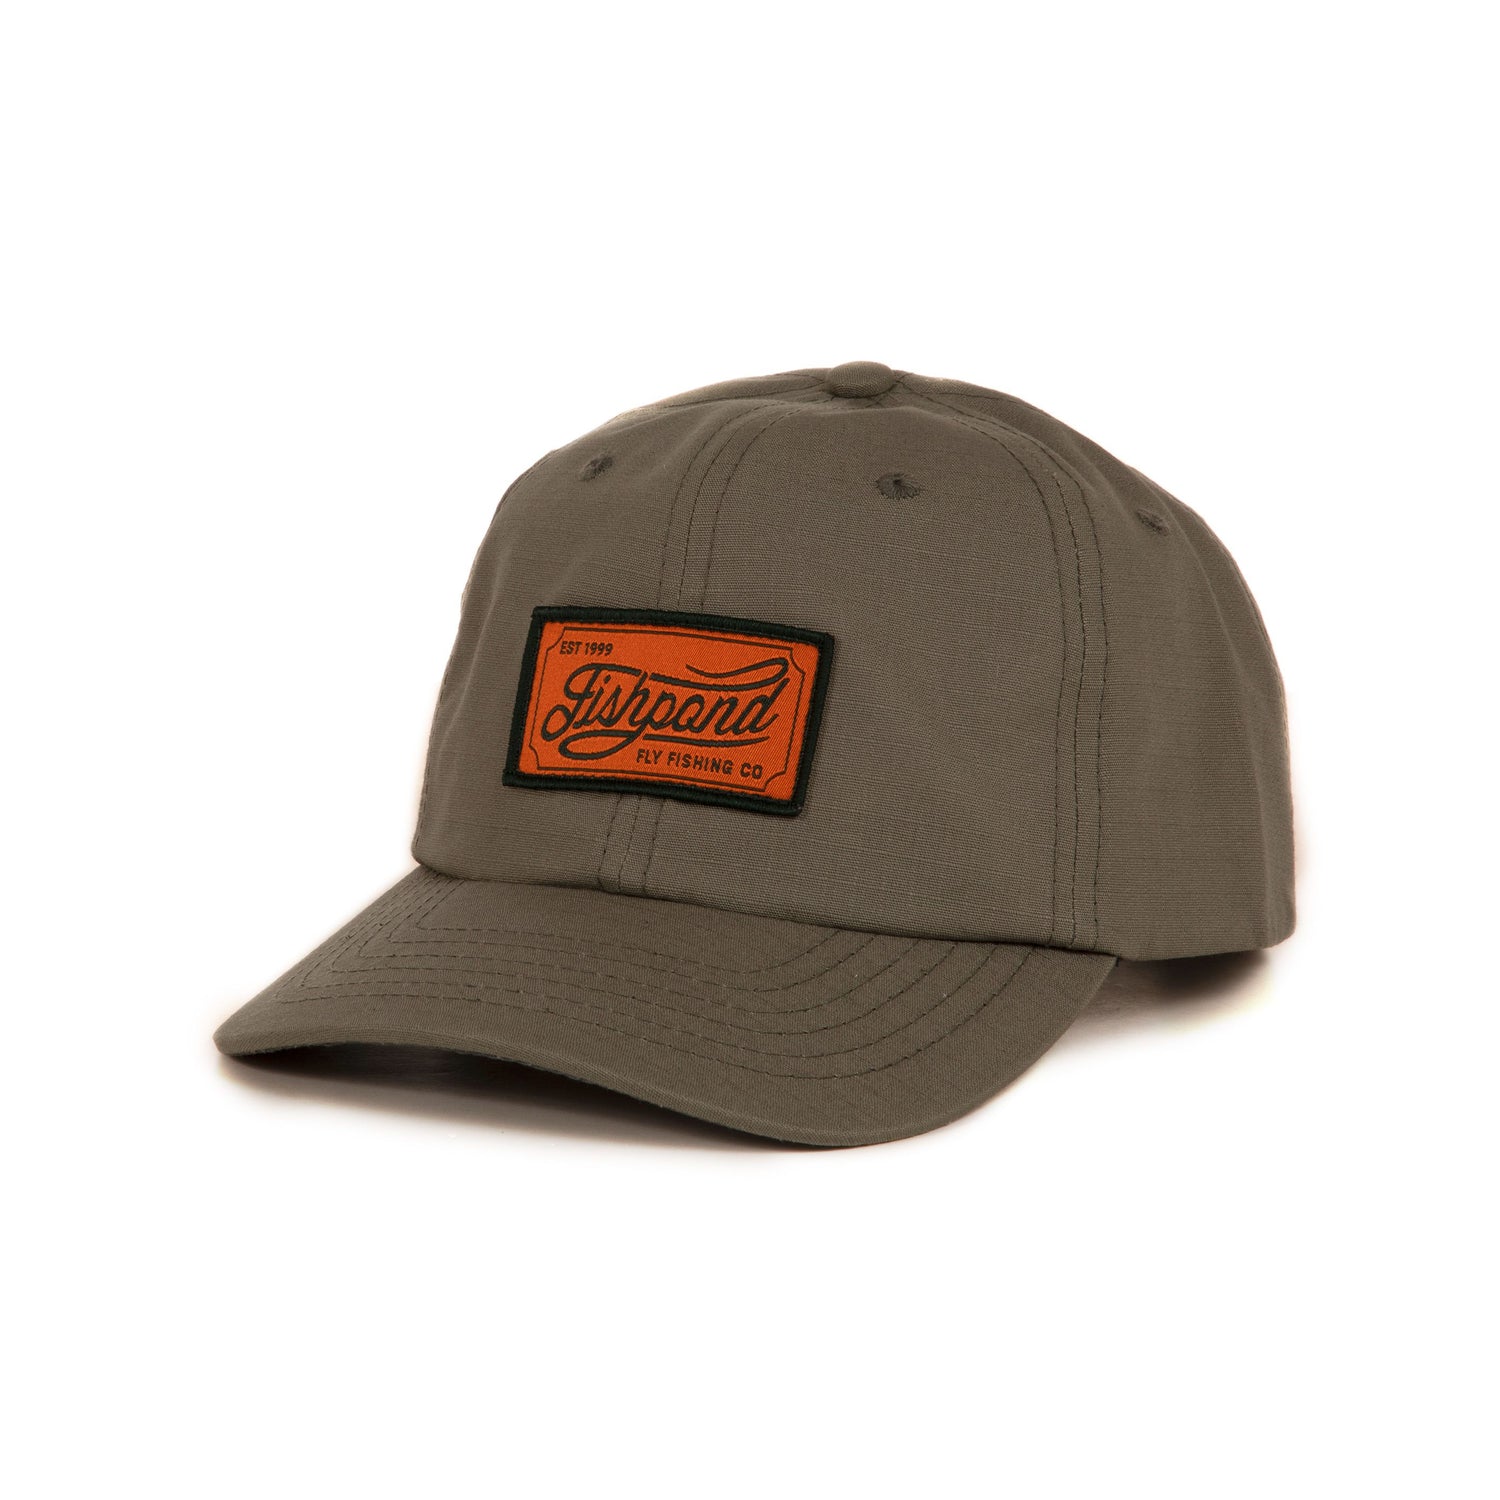 Fishpond Hats Heritage Lightweight